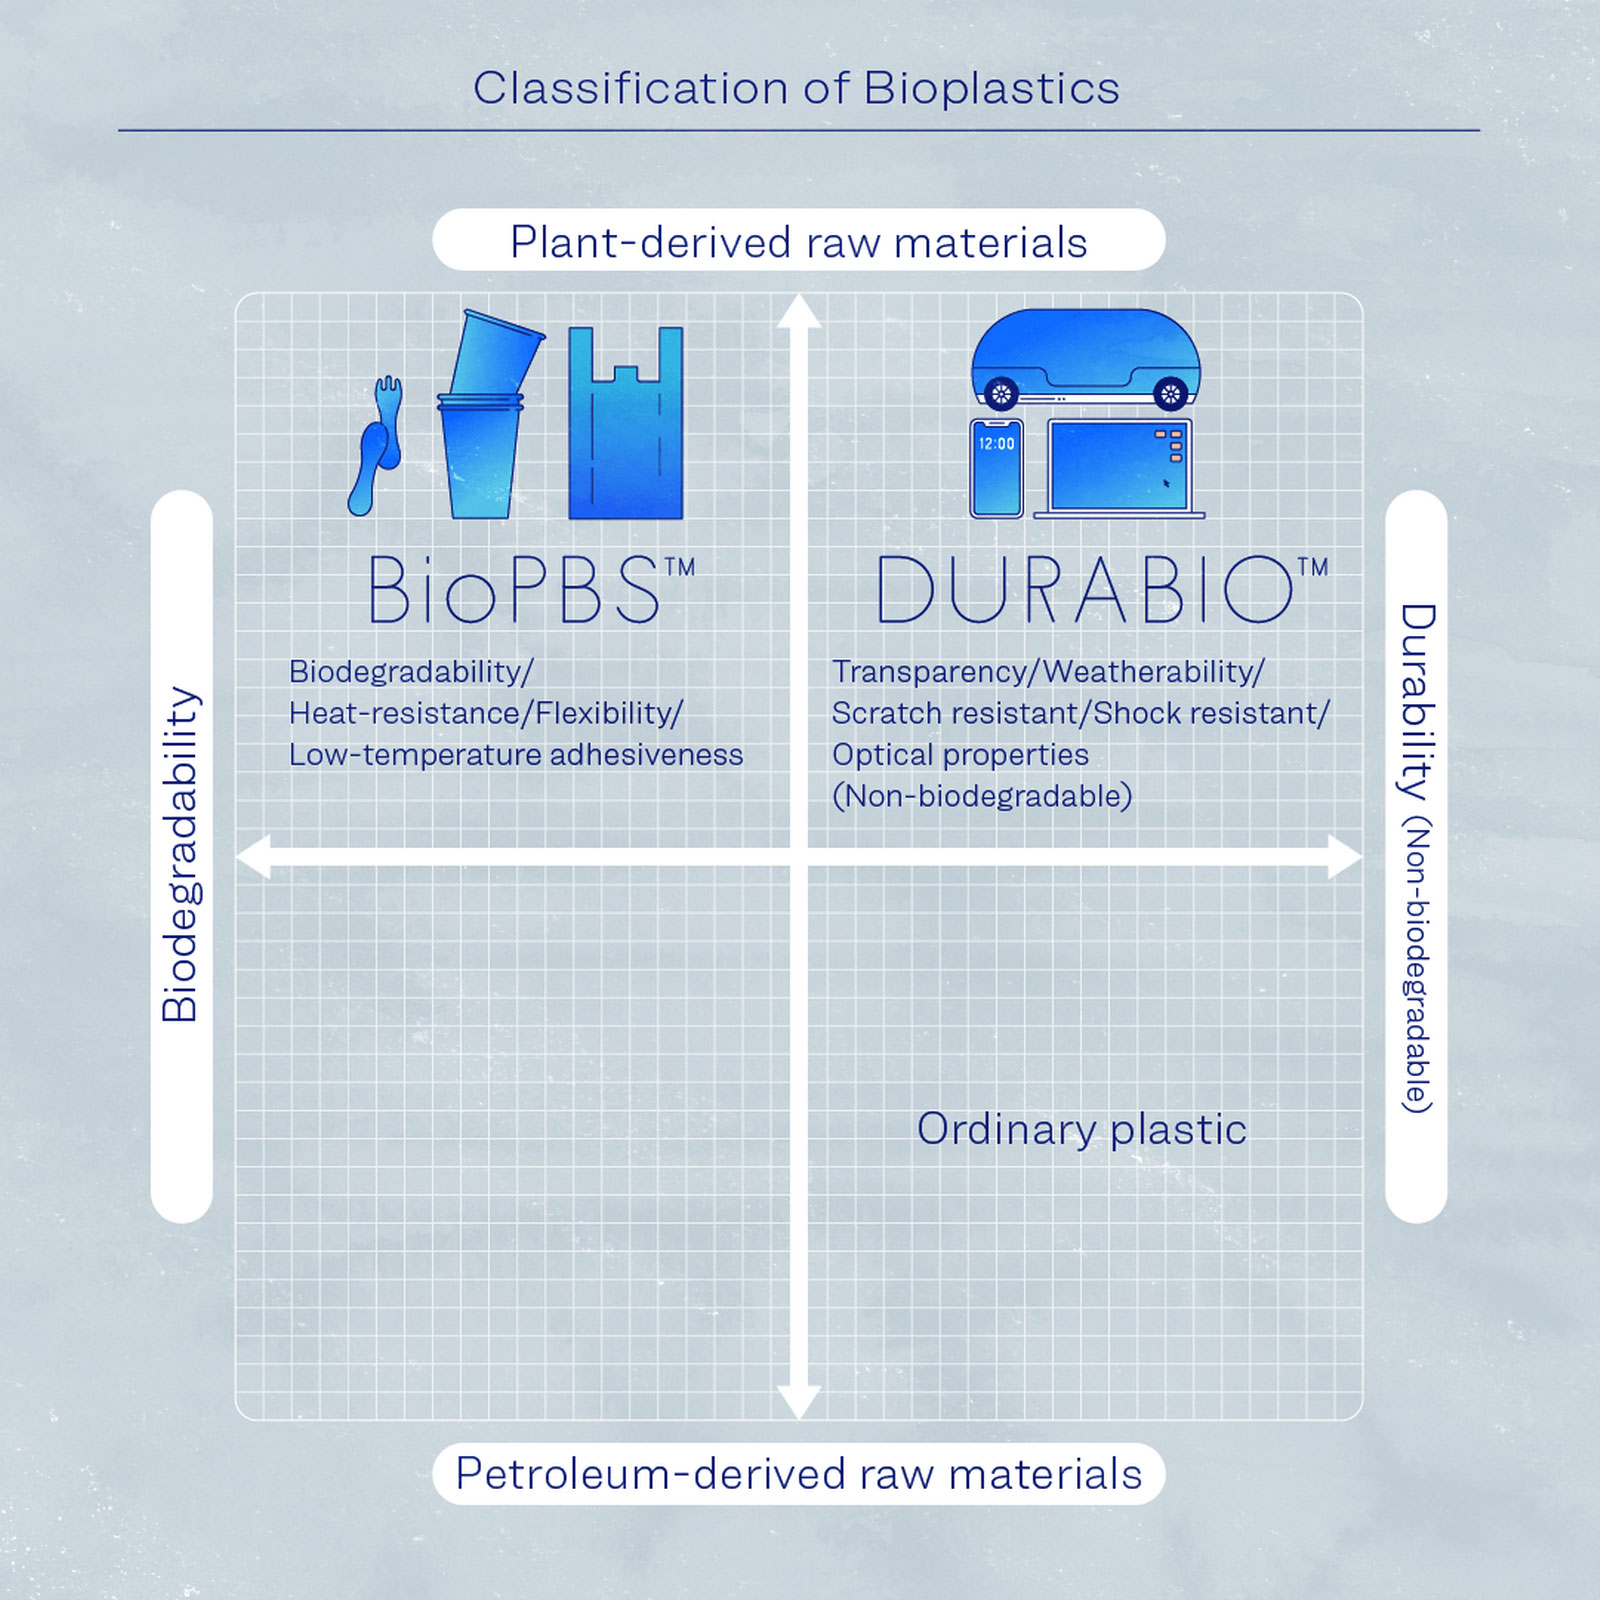 Classification of bioplastics